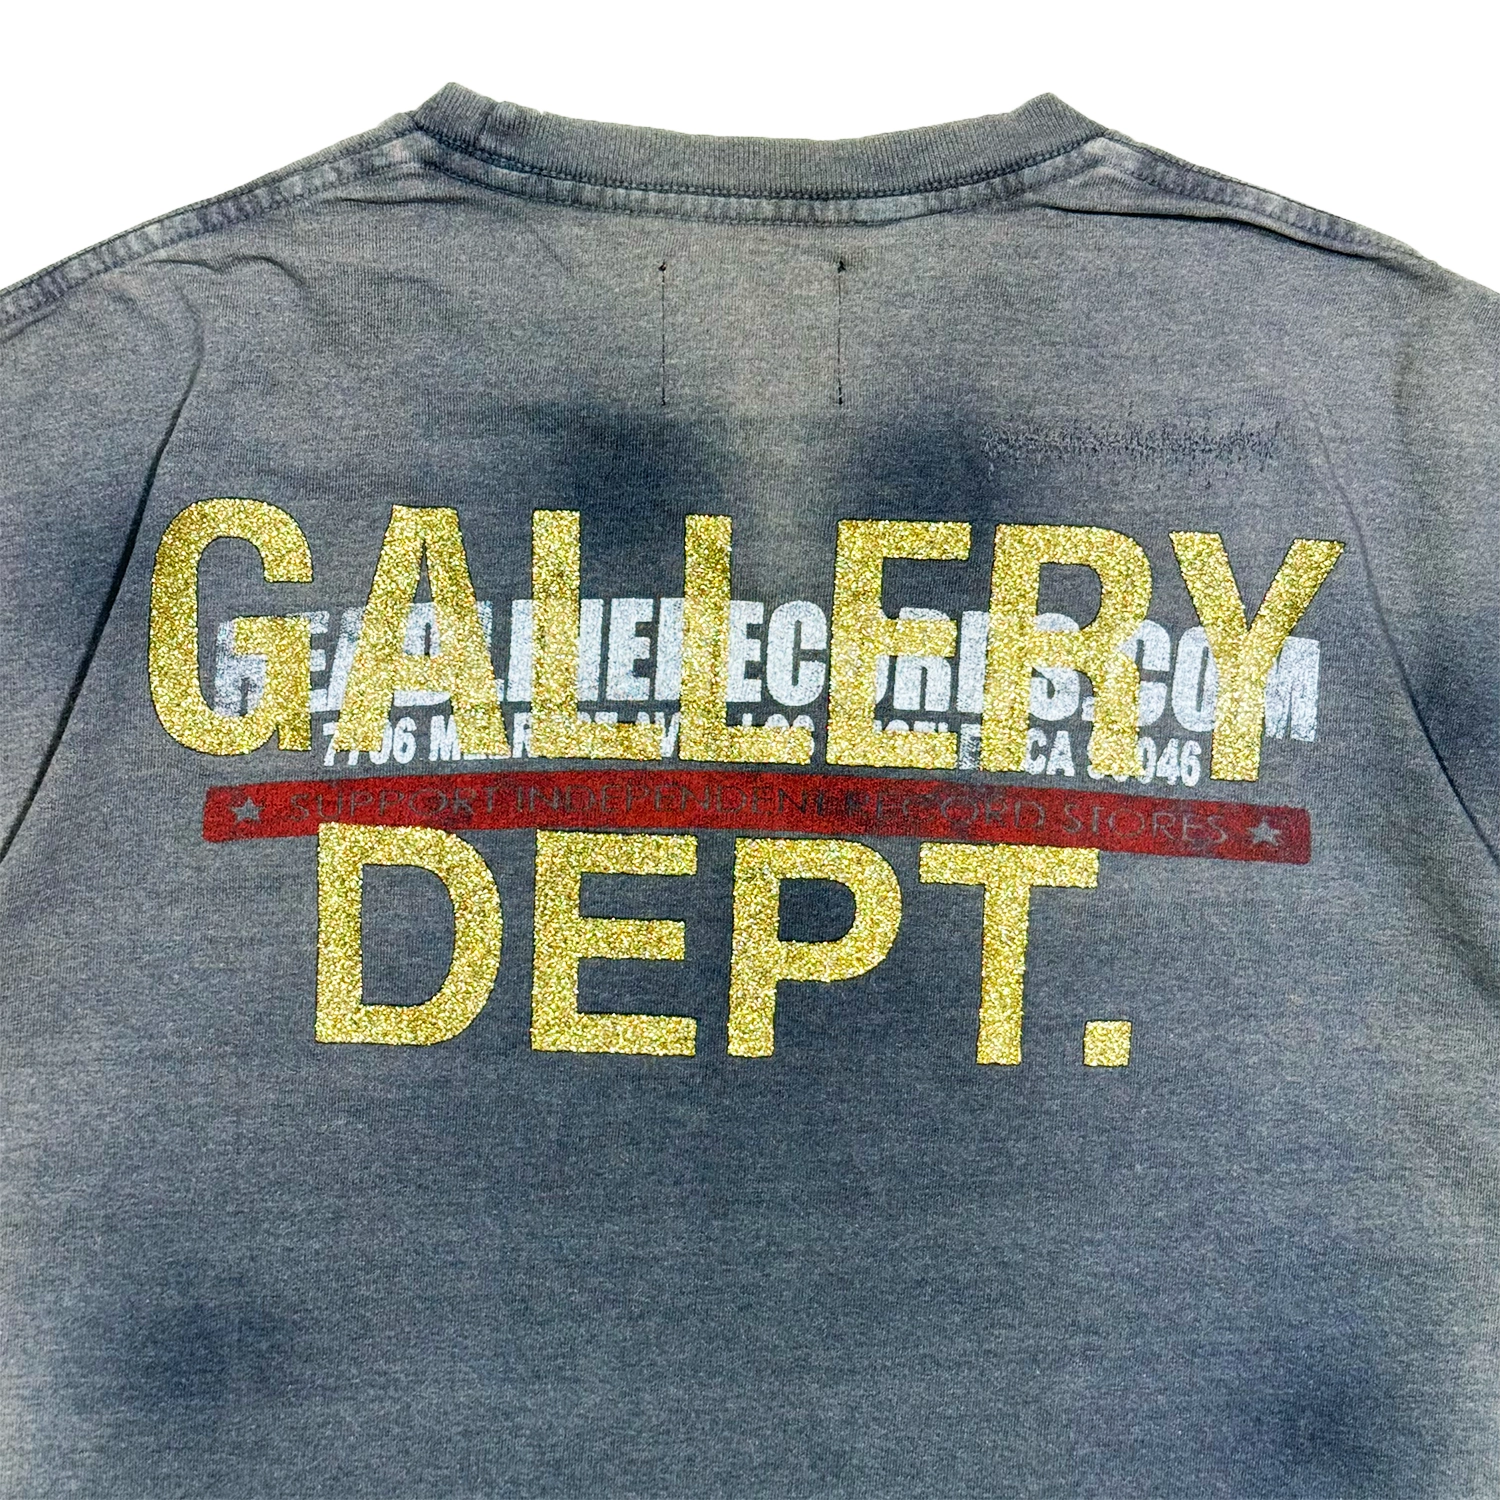 GALLERY DEPT. / HEADLINE RECORDS TEE BLACK